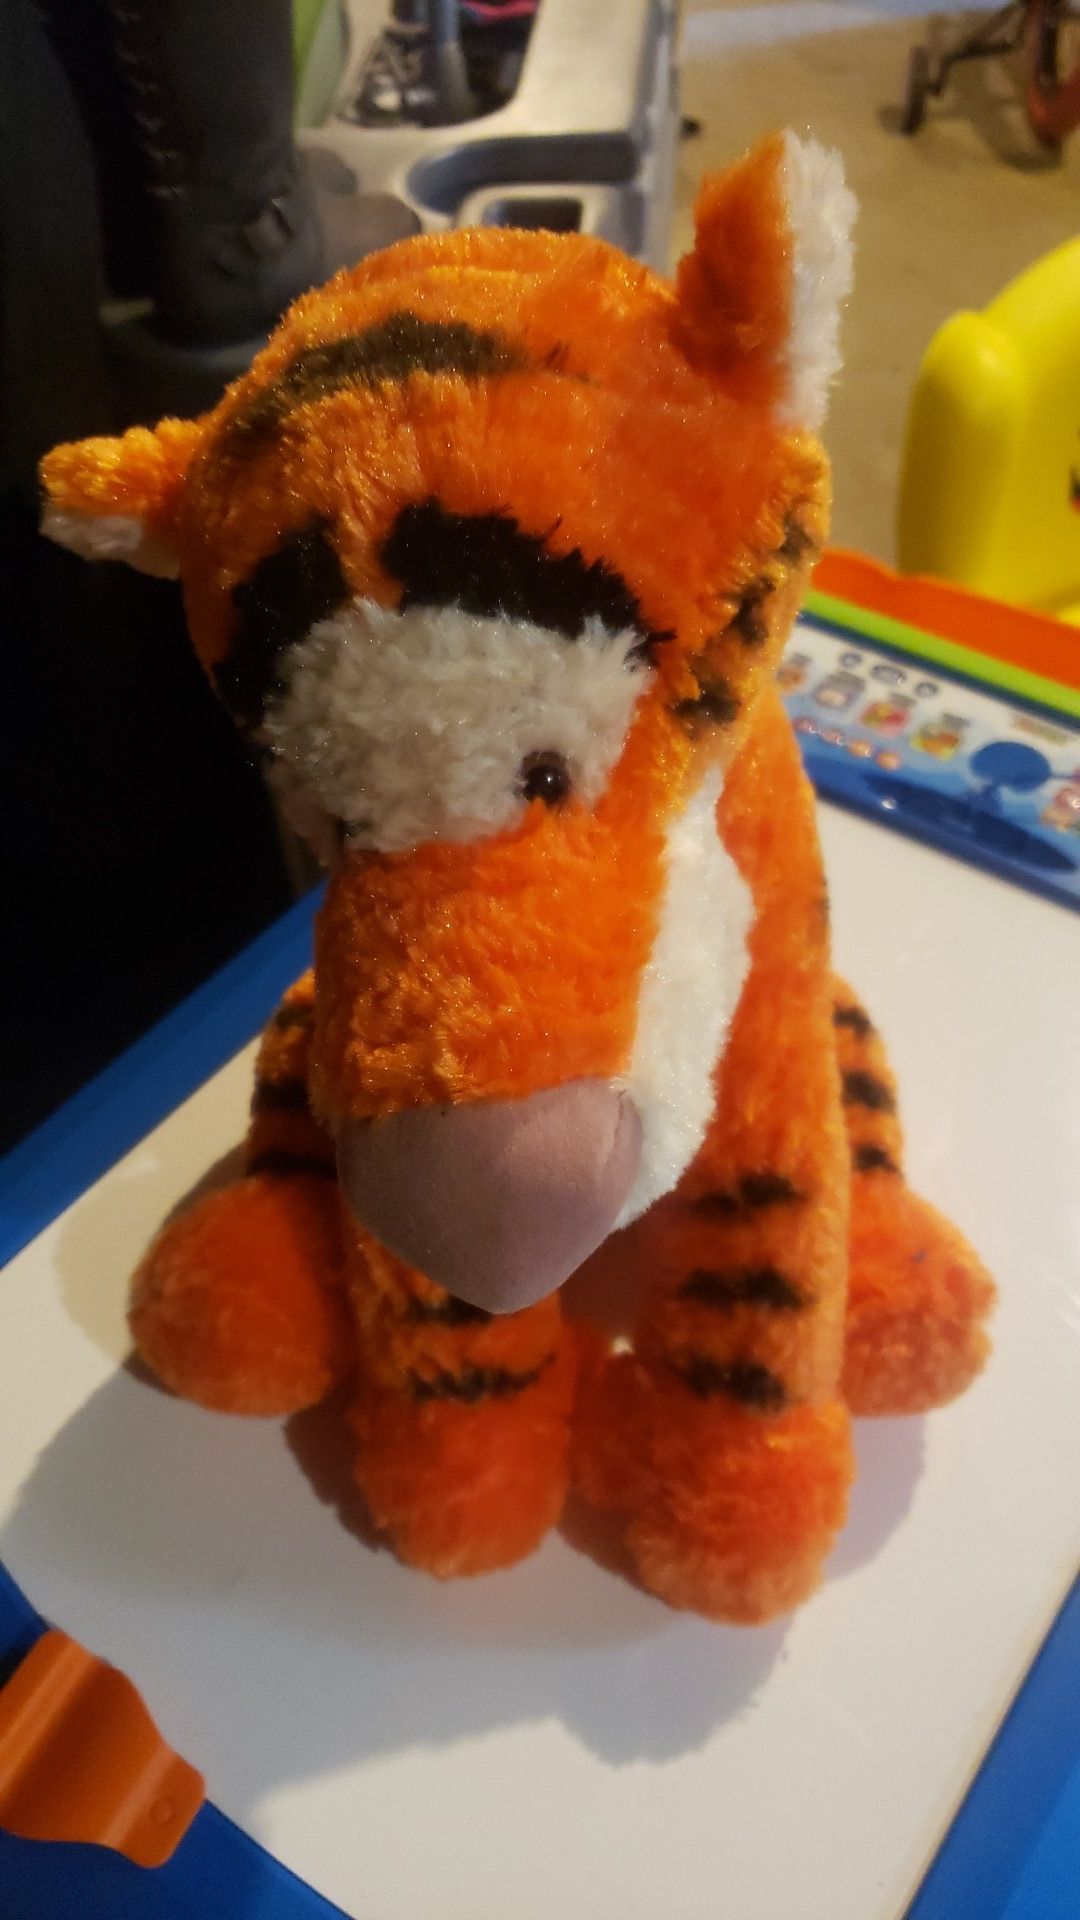 Tiger stuffed animal